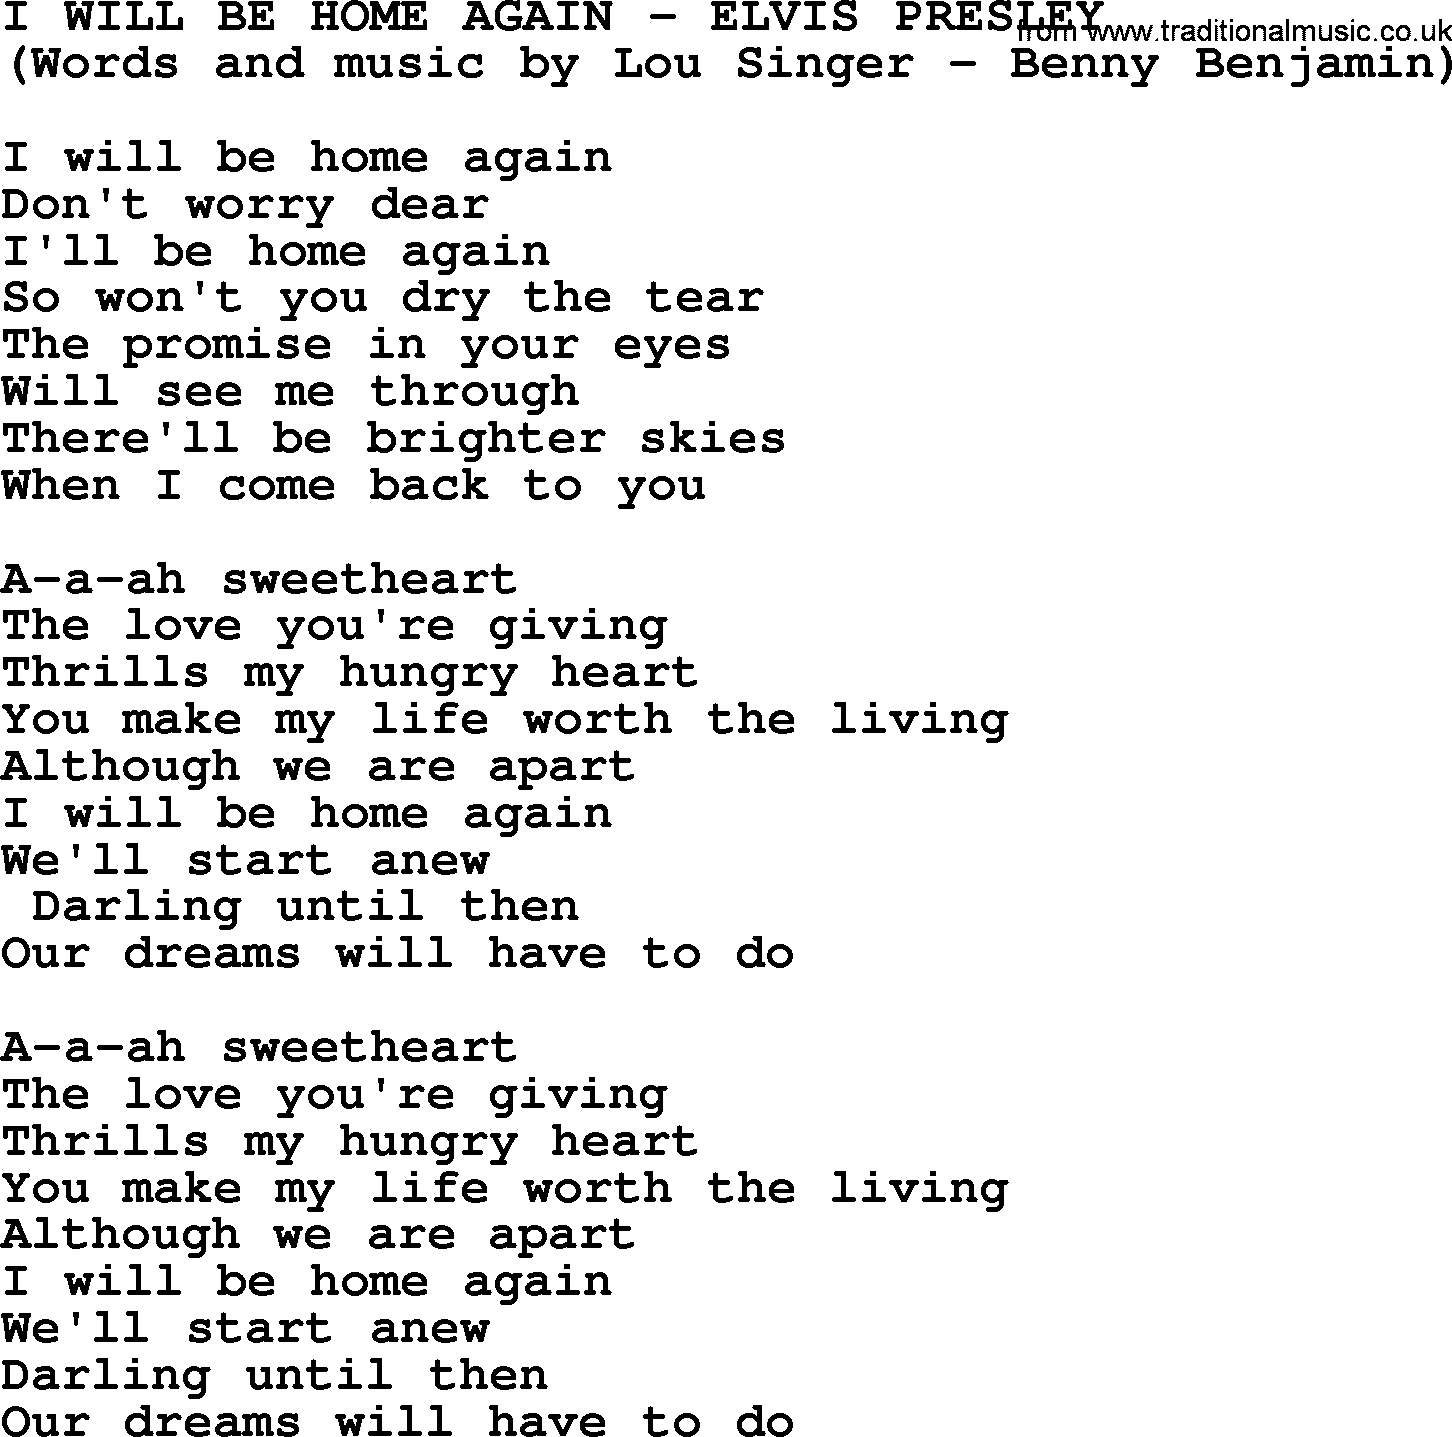 Elvis Presley song: I Will Be Home Again lyrics